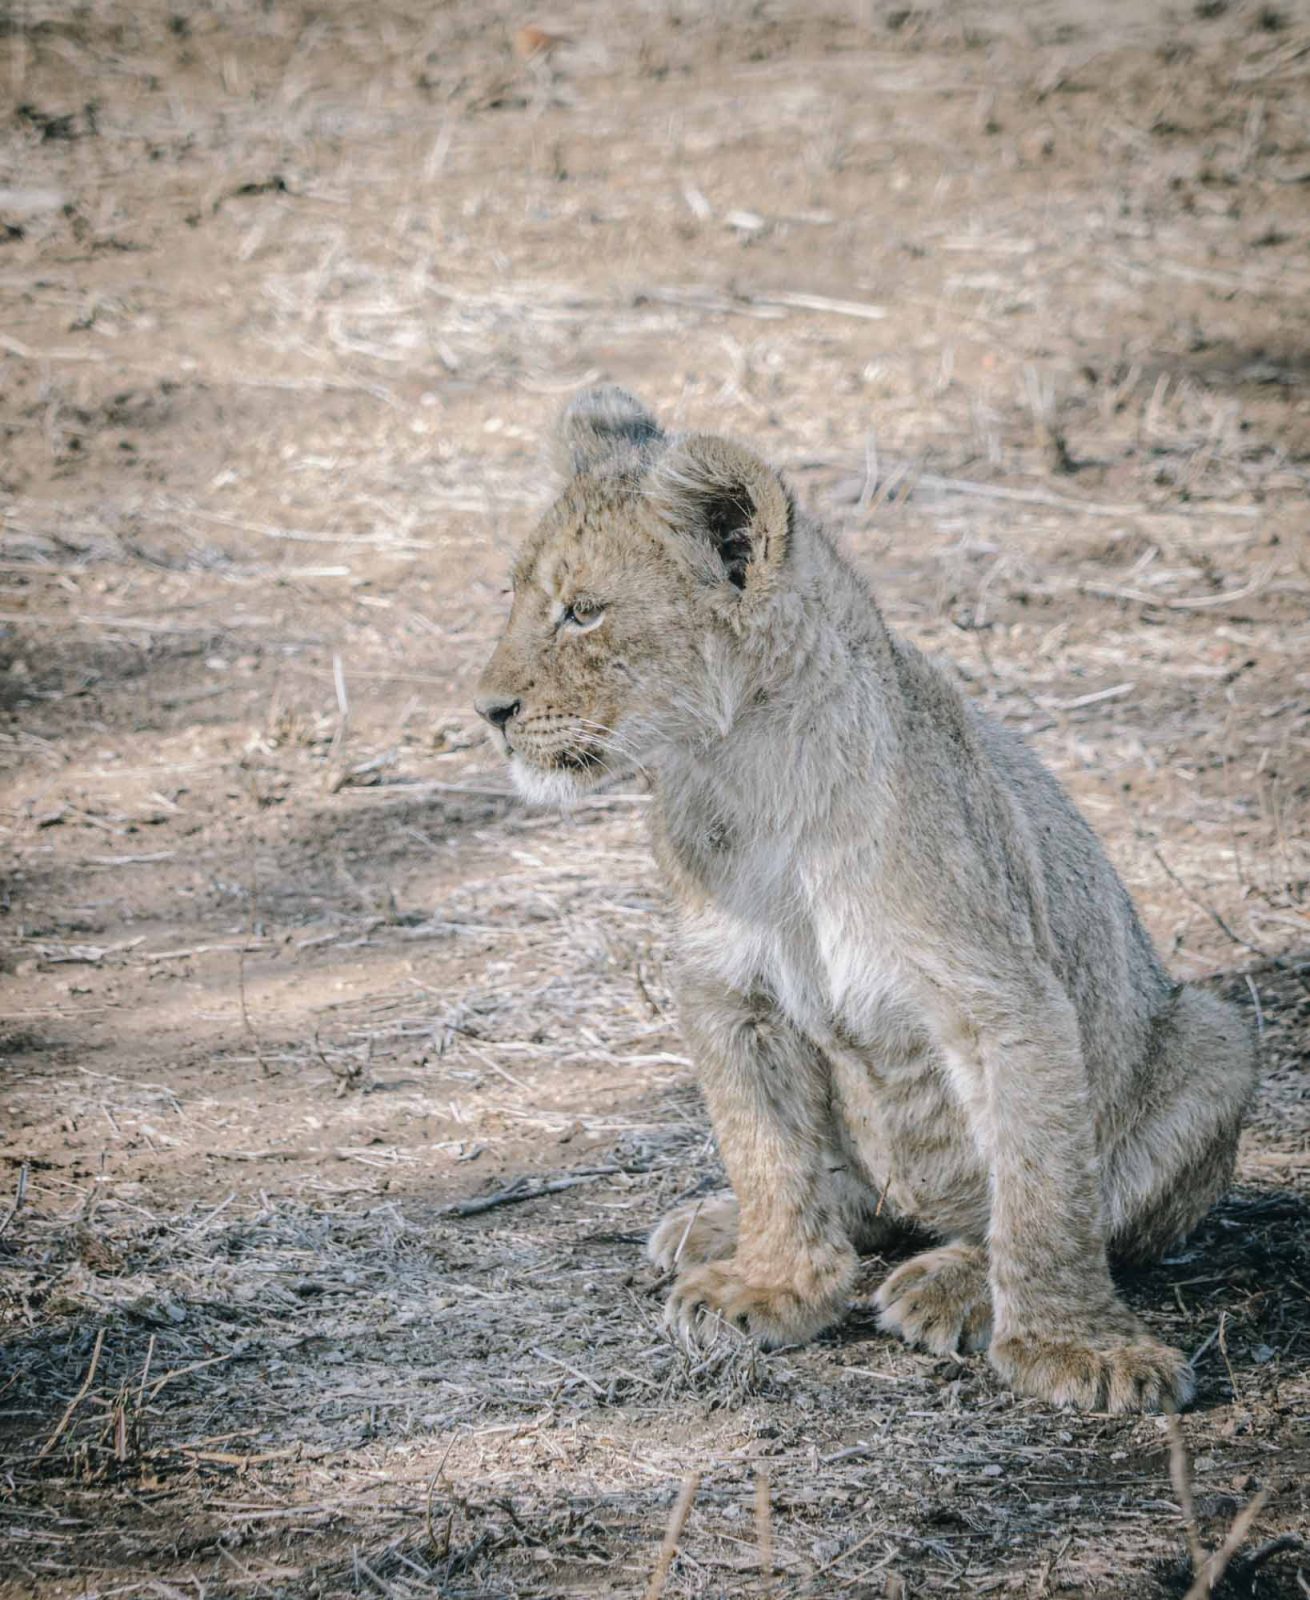 South Africa Kruger Singita safari lion cub 02920